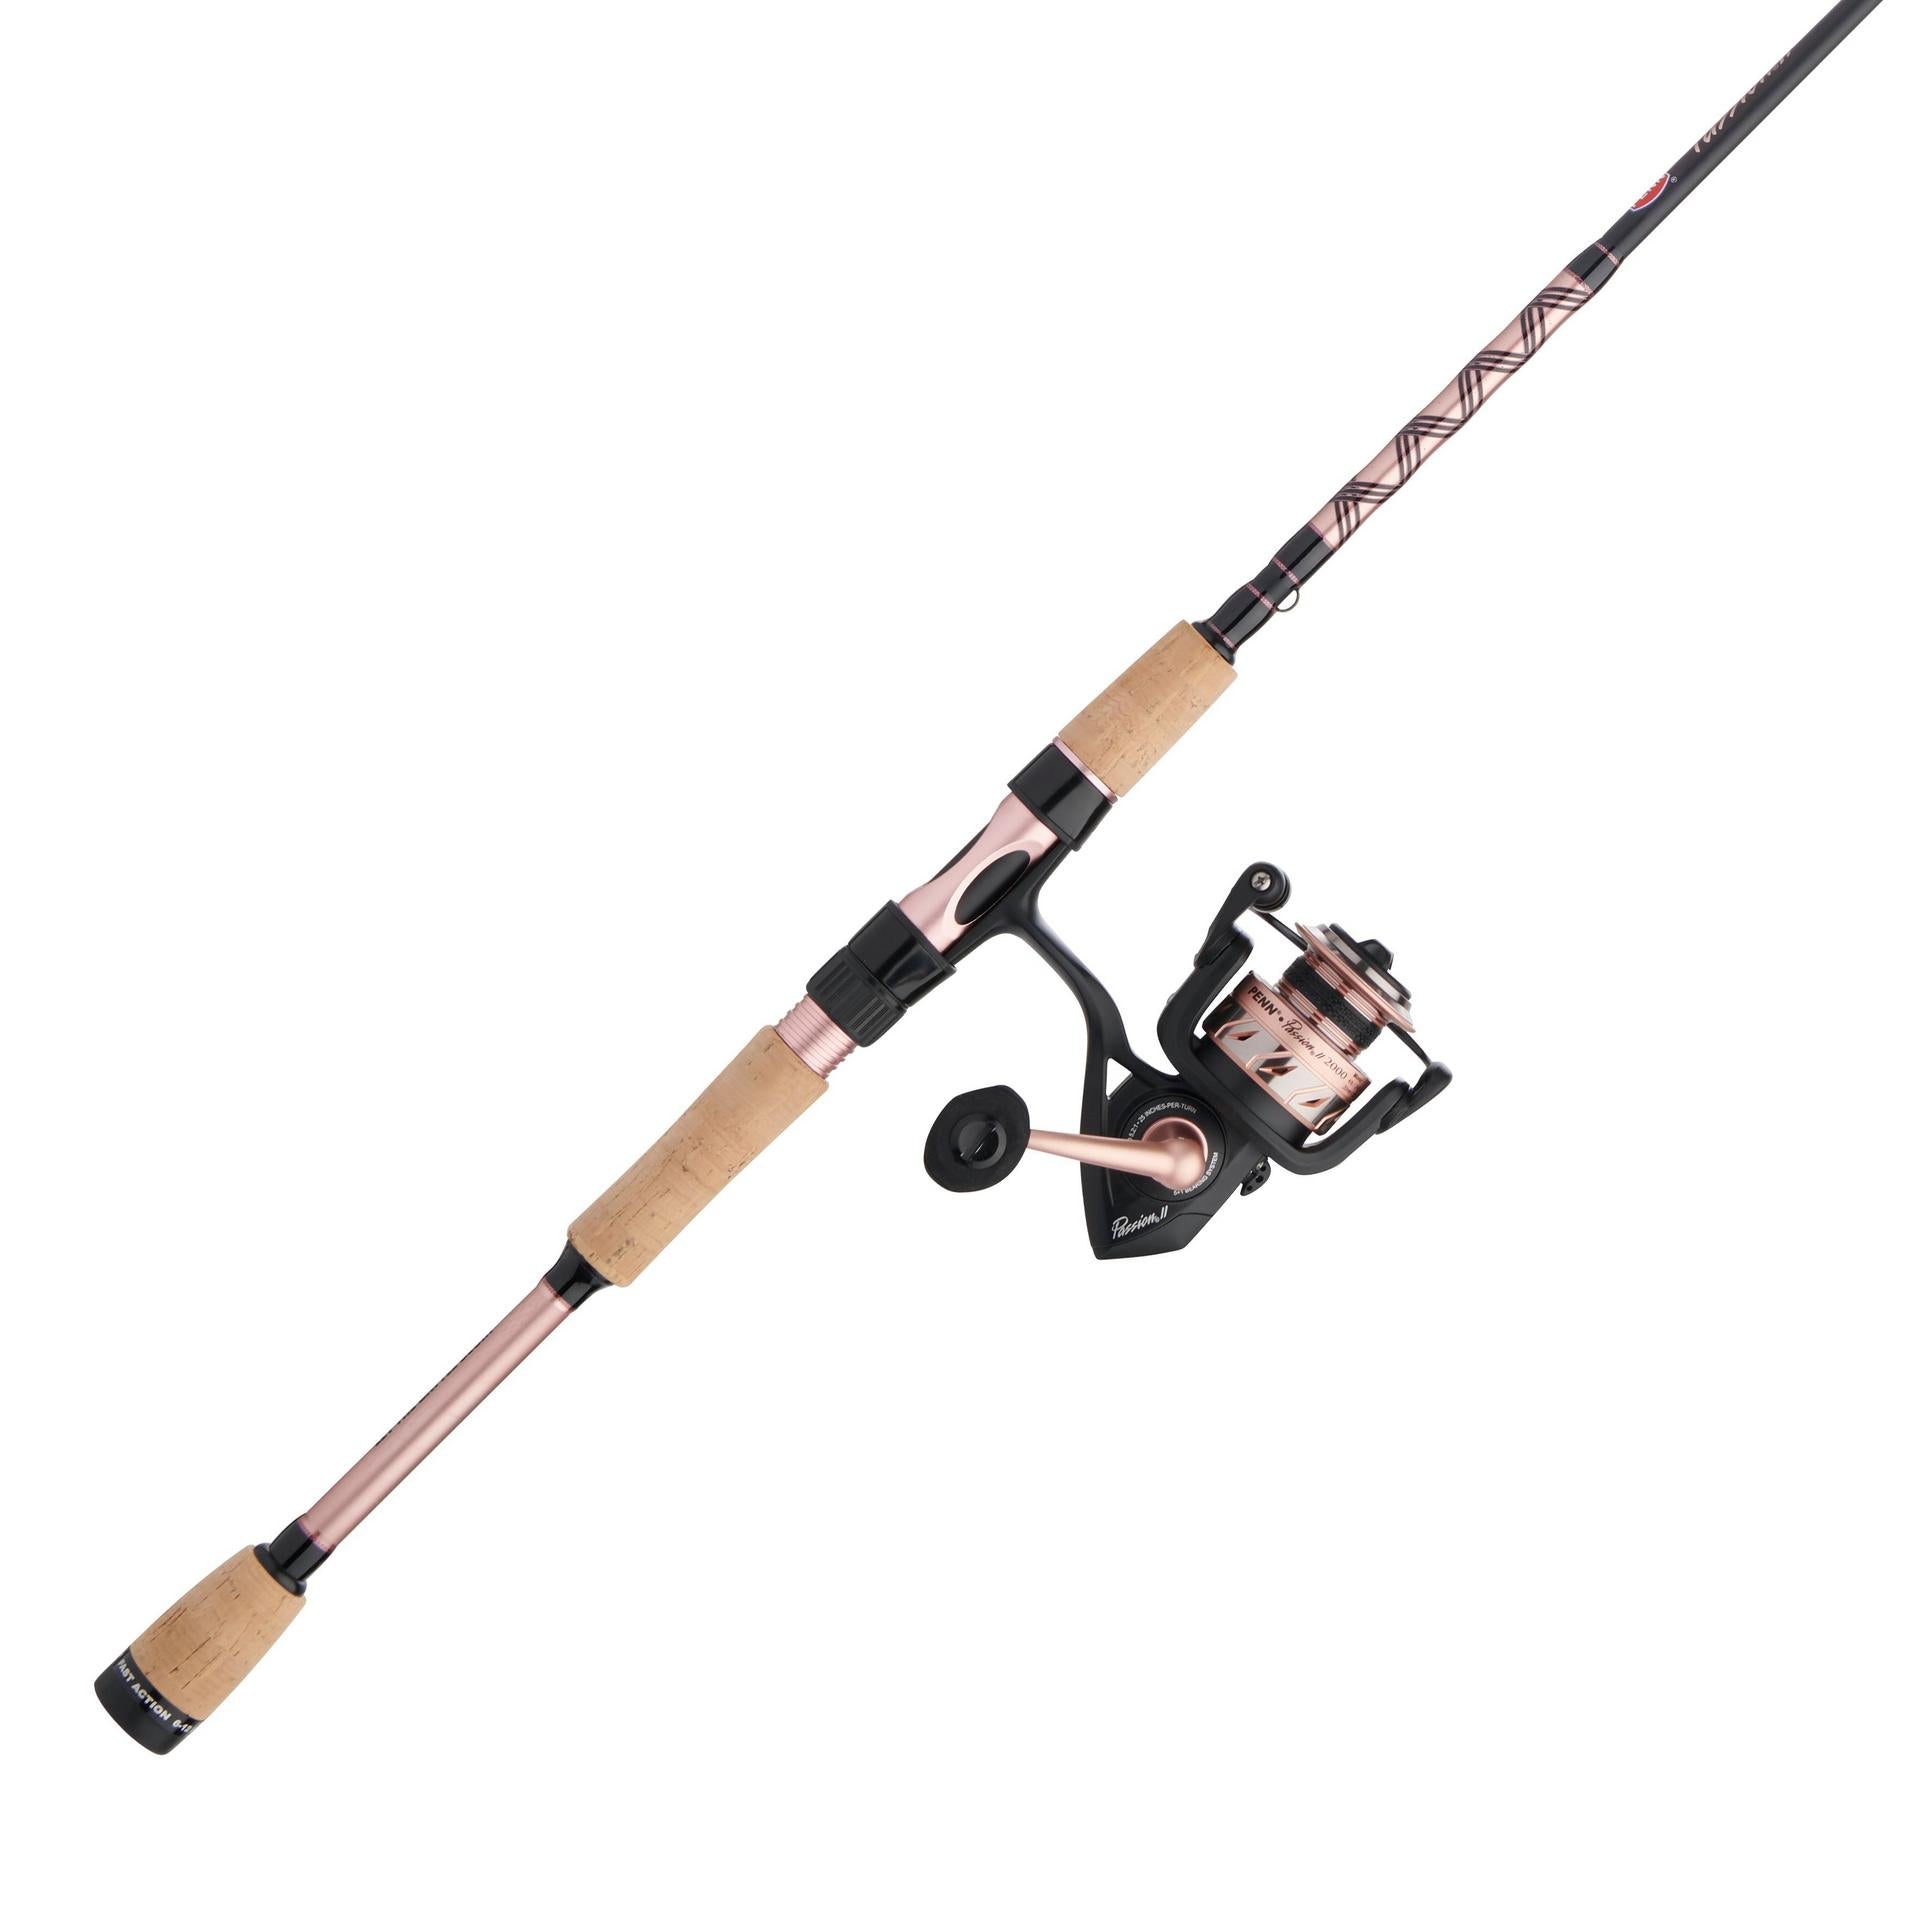 $26/mo - Finance Penn Battle III Spinning Reel and Fishing Rod Combo